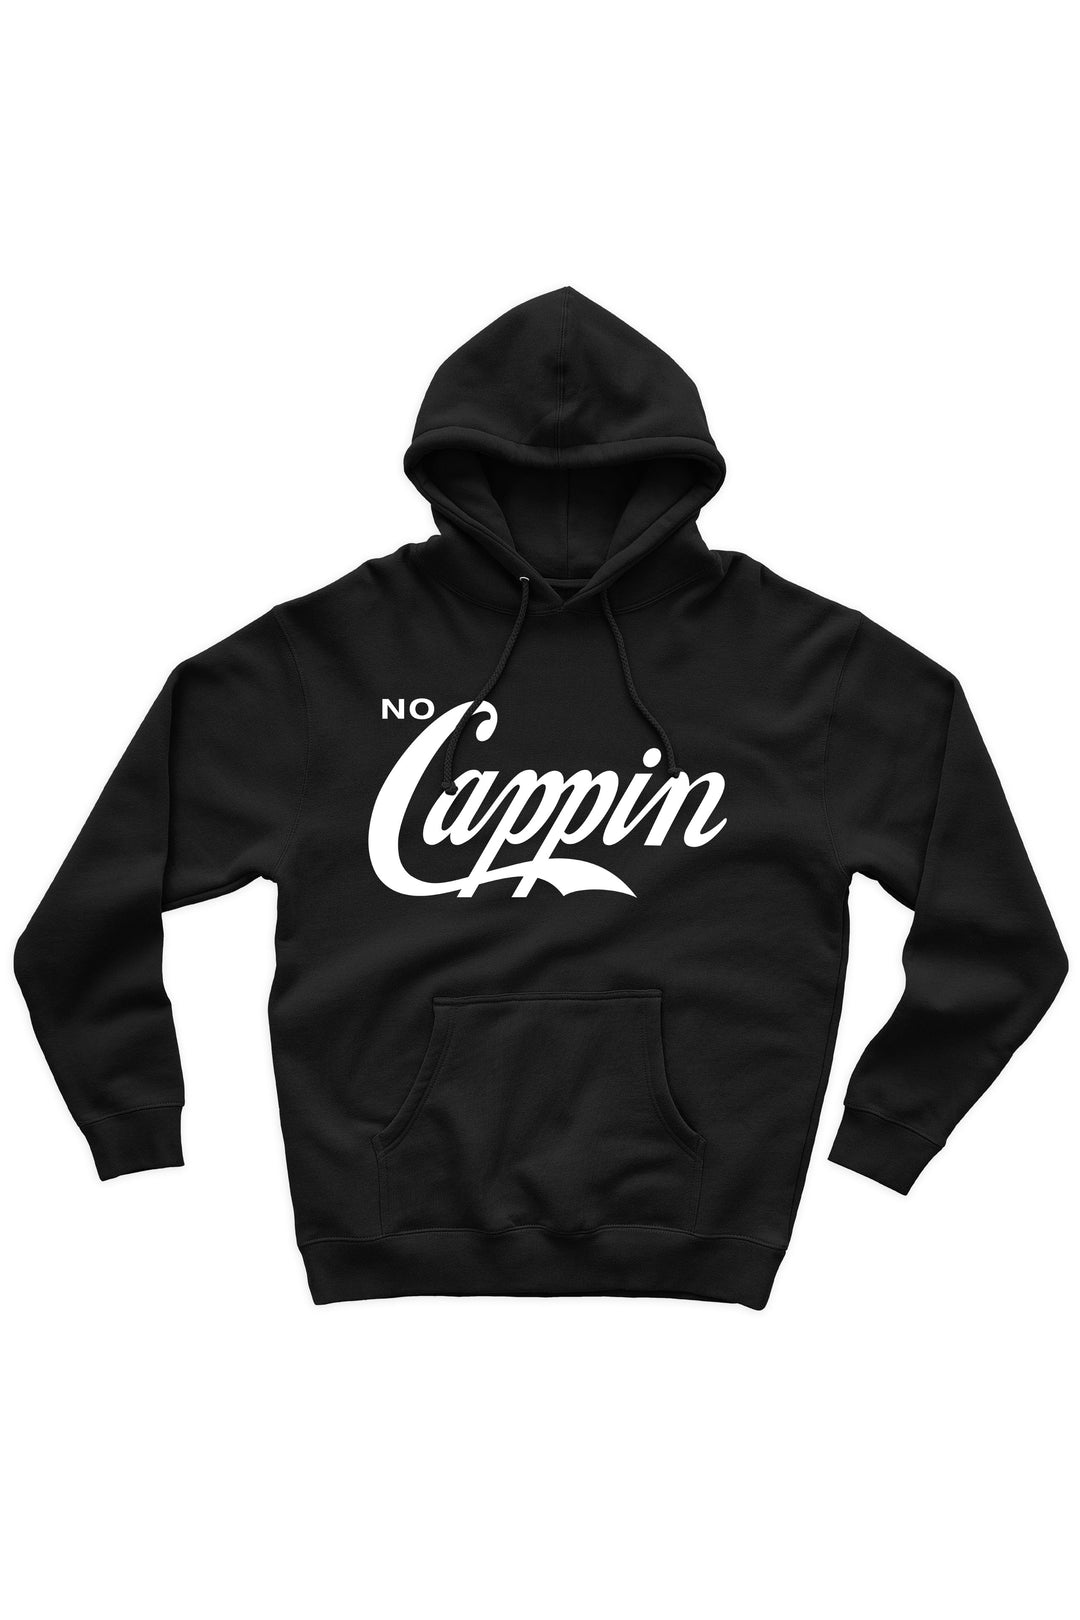 No Cappin Hoodie (White Logo) - Zamage